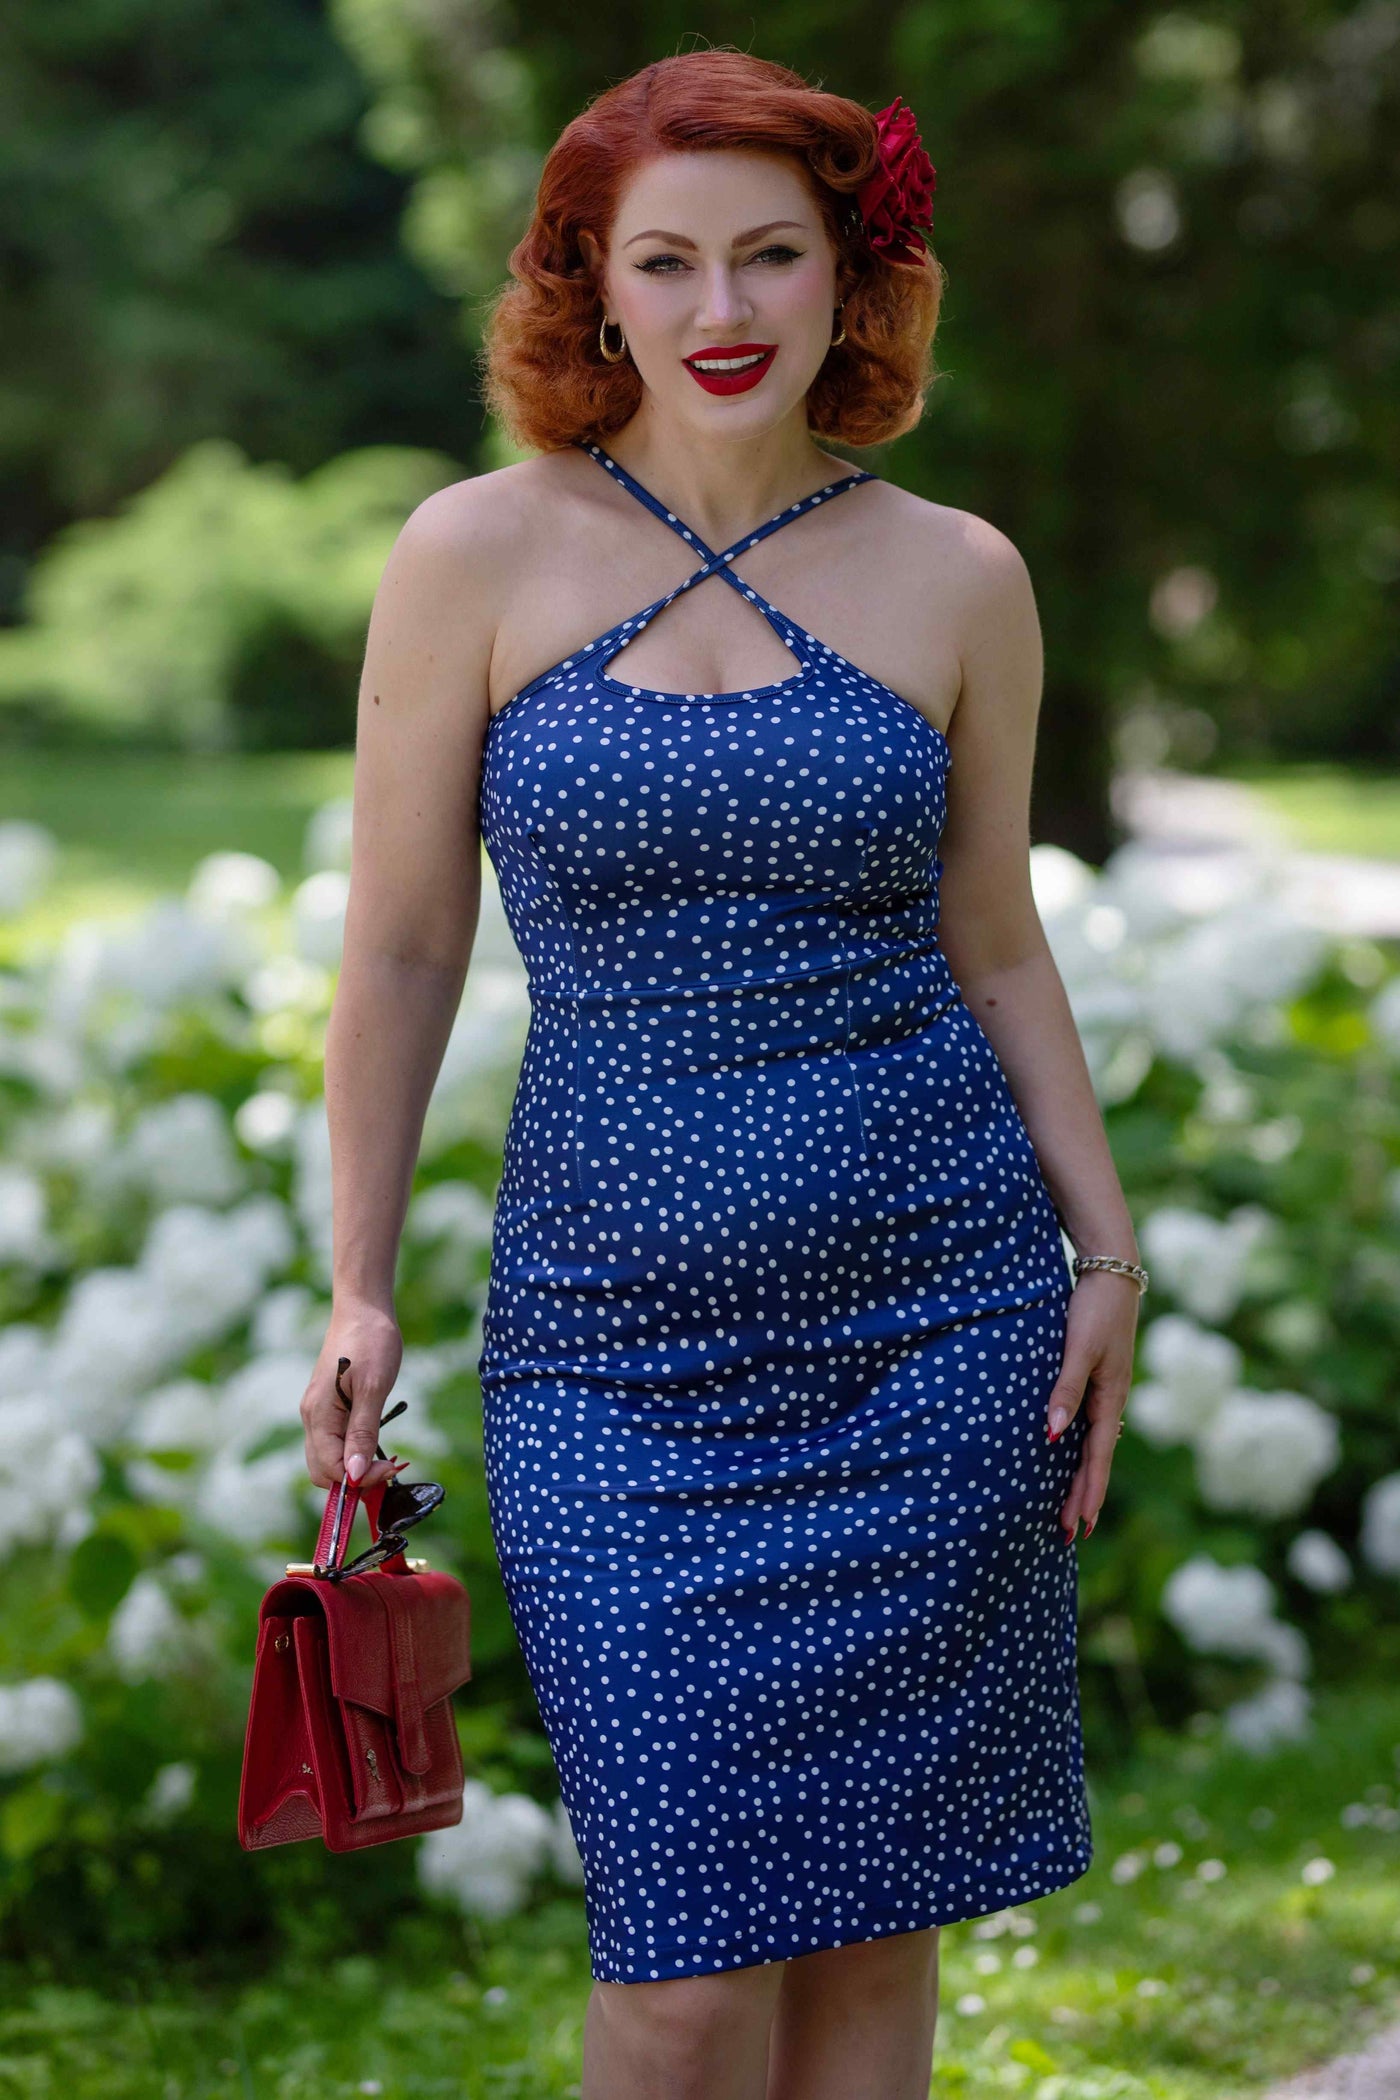 Model wearing a Cross Strap Fitted Dress in Blue Polka Dots